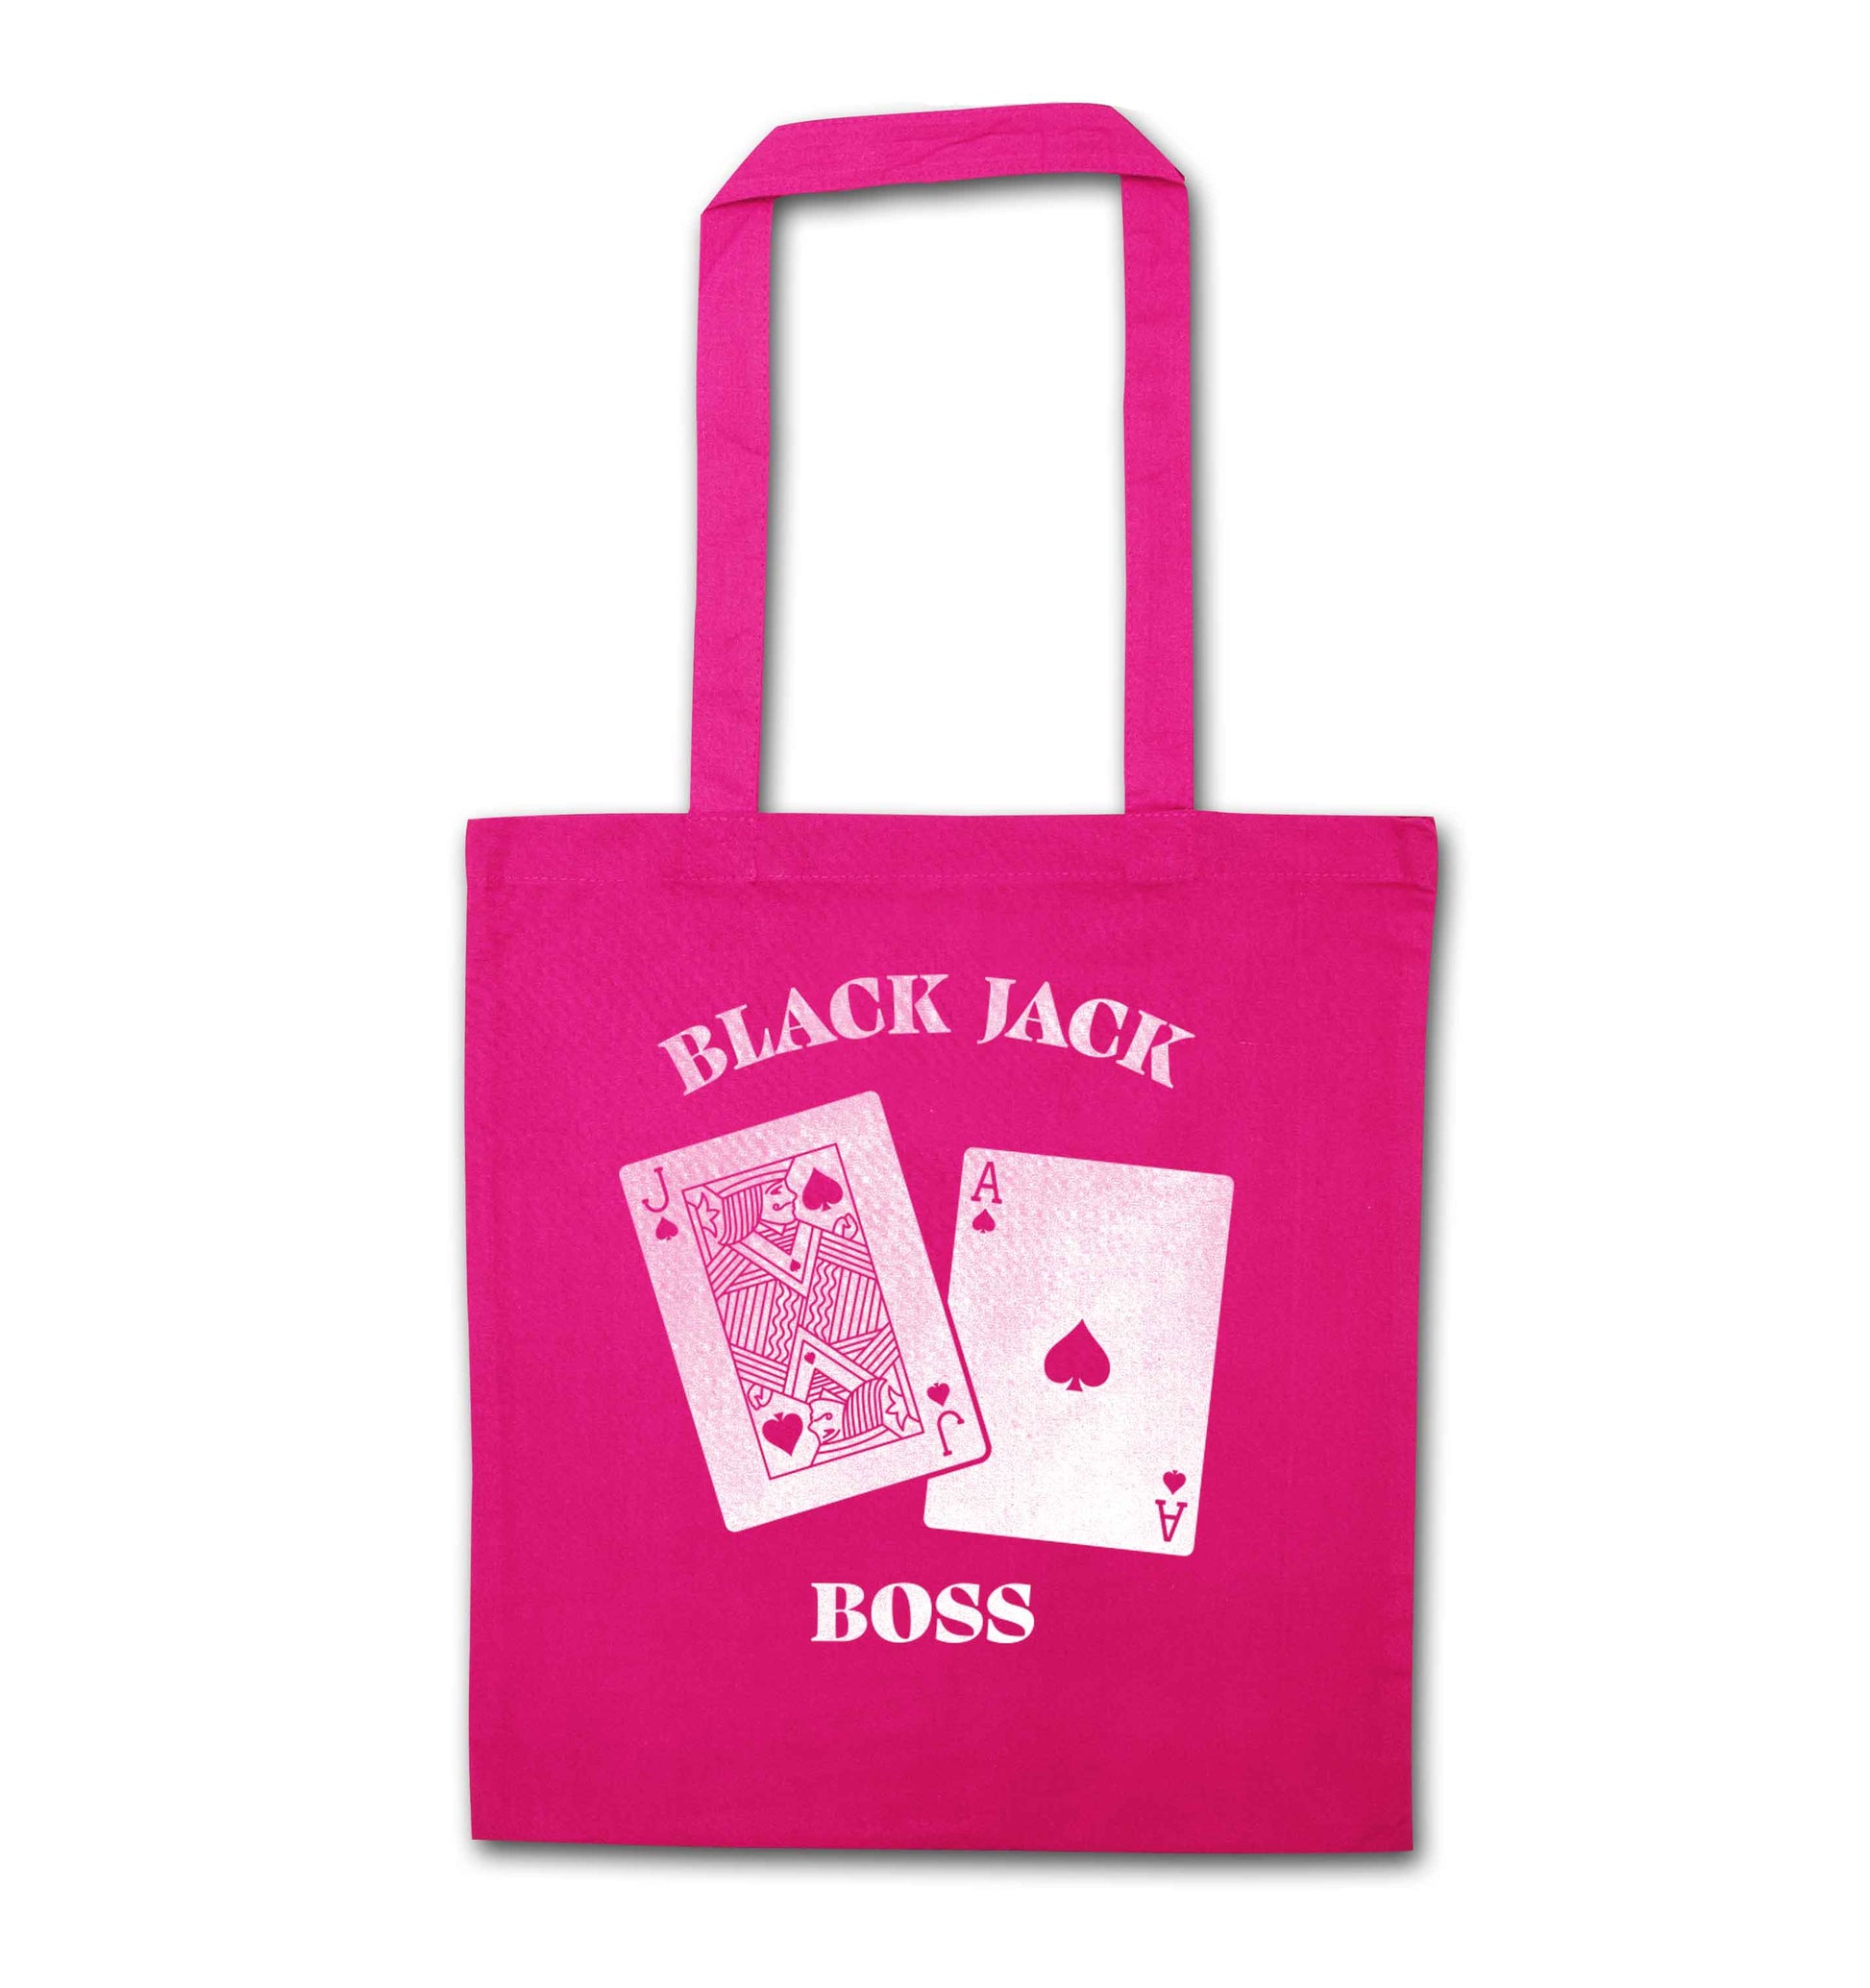 Blackjack boss pink tote bag